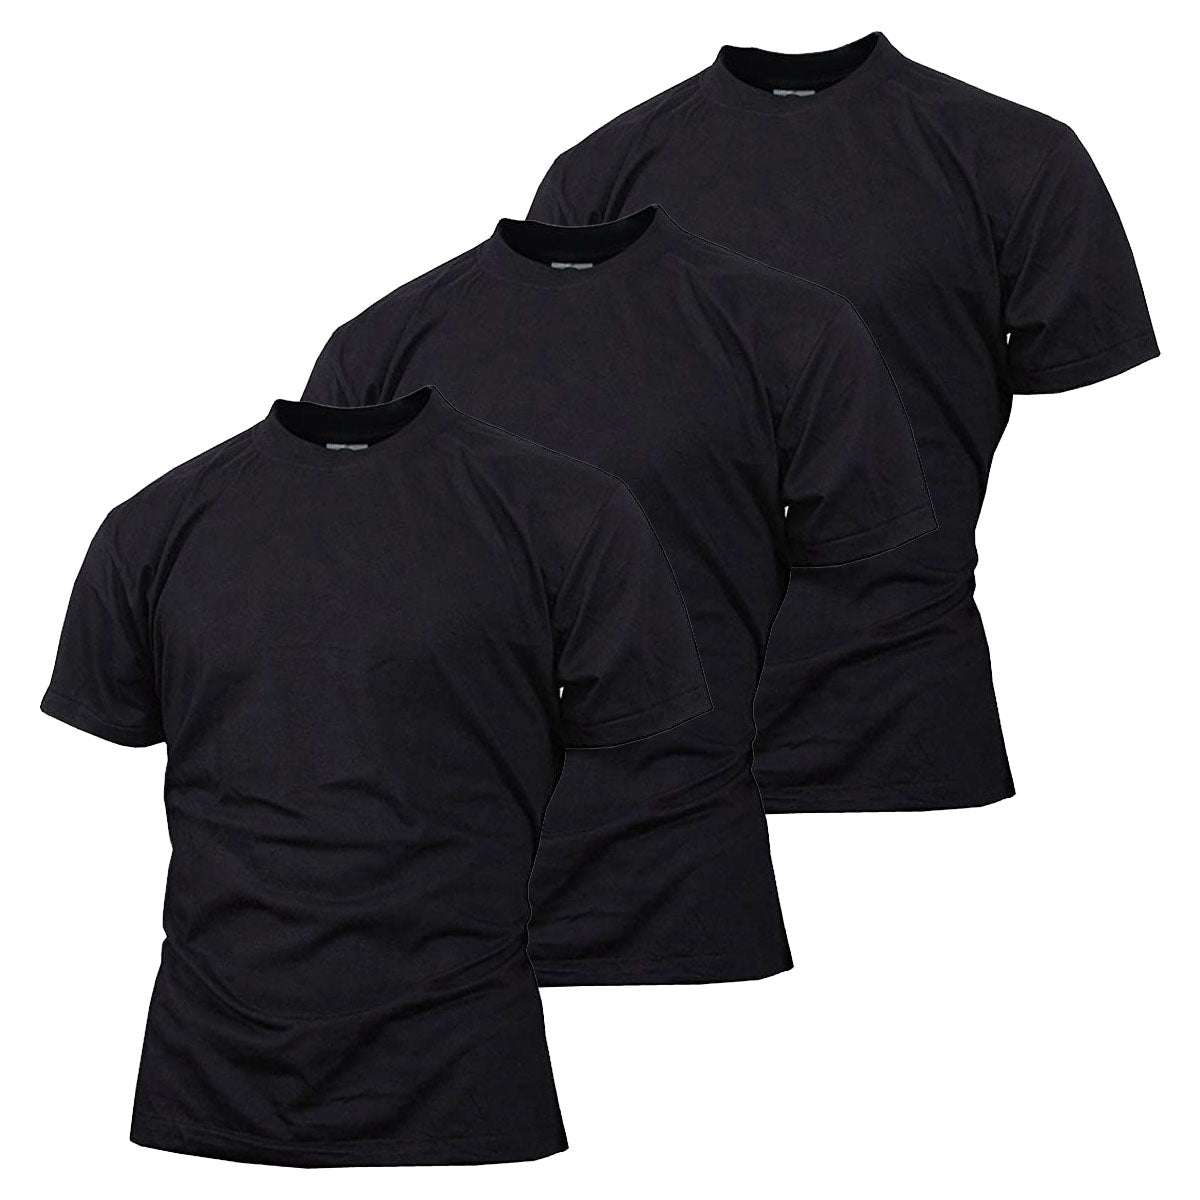 Pro Club Men's Heavyweight Short Sleeve T-Shirt